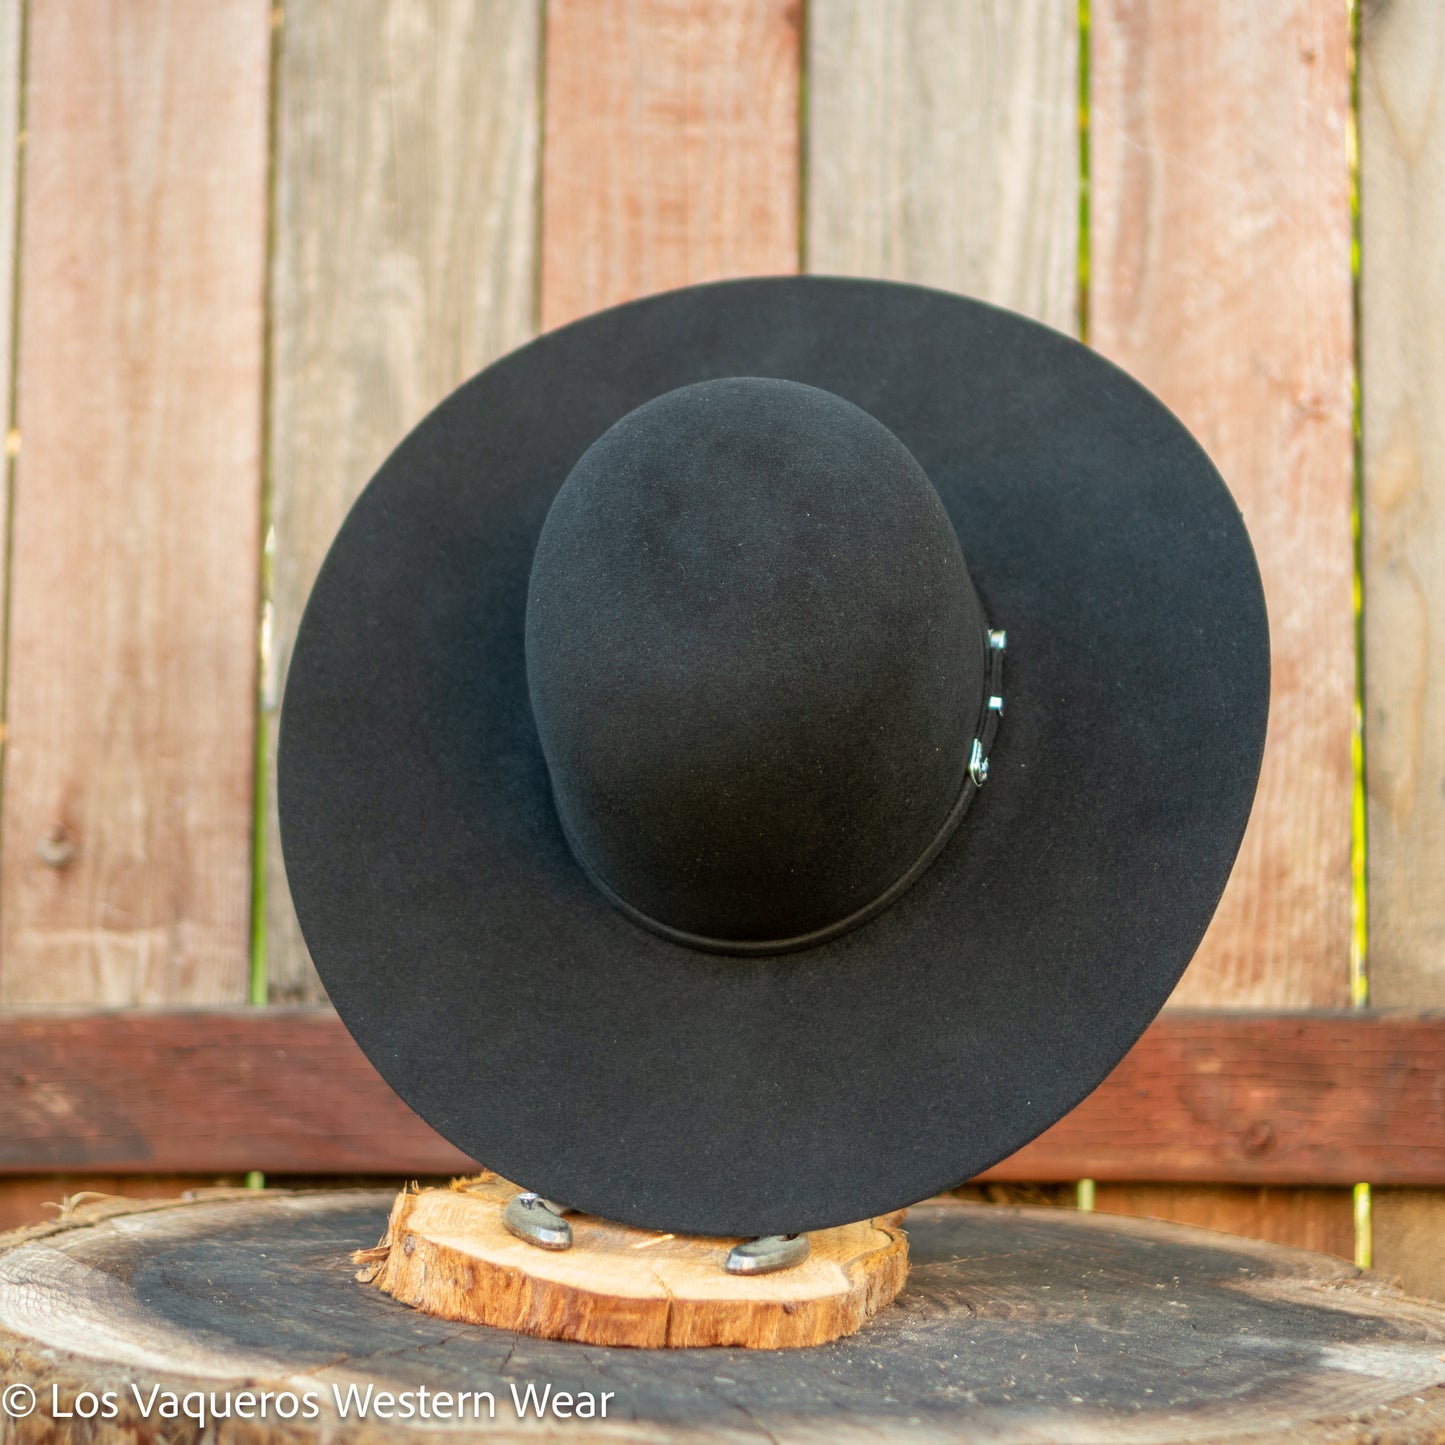 Rodeo King 7X Beaver Felt Hat Regular Crown Black